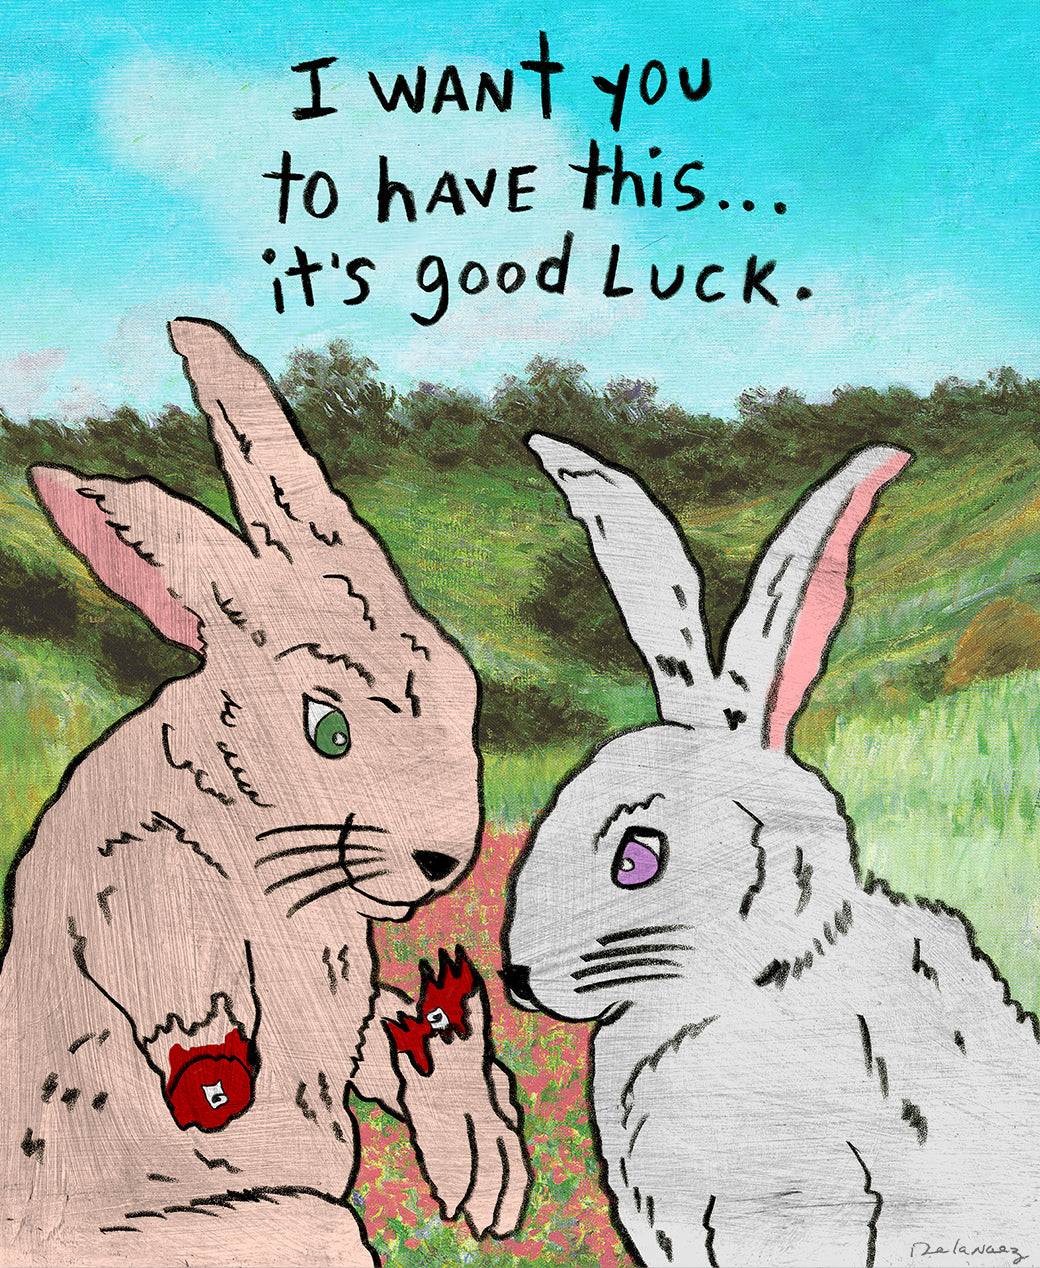 King of Pop Art Nelson De La Nuez good luck charm bunny rabbit humor superstition animal